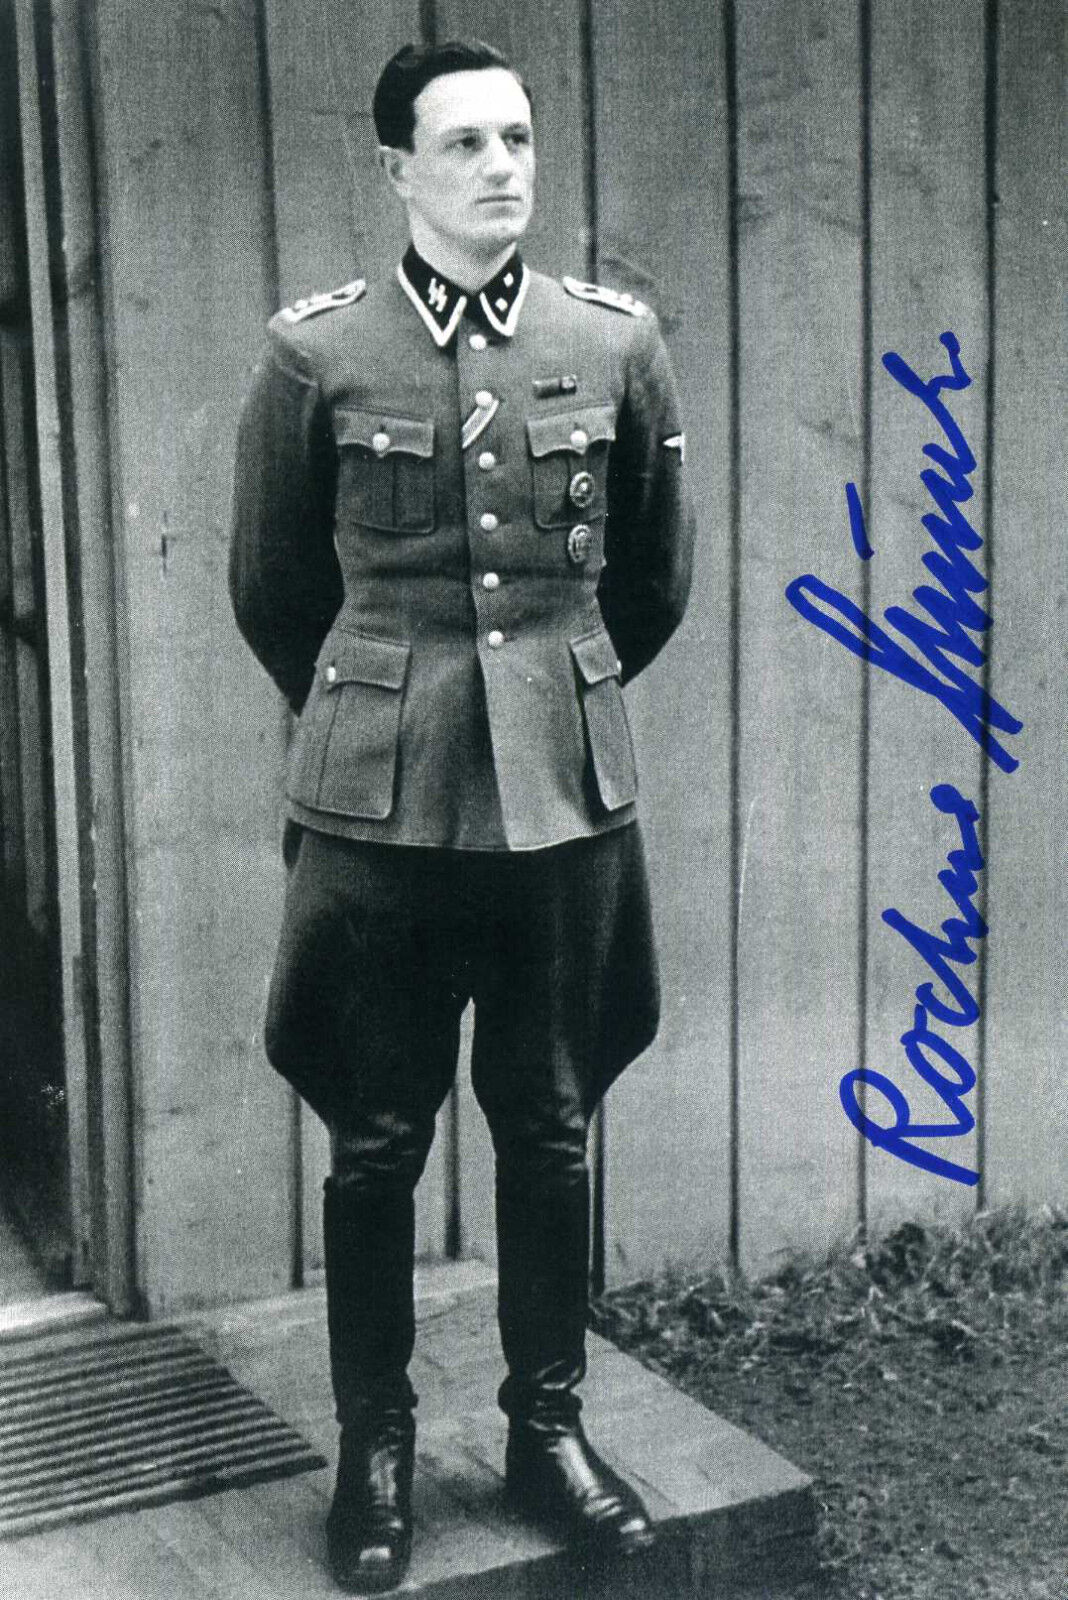 ROCHUS MISCH Signed Photograph - Adolf Hitler\'s Bodyguard / Courier - preprint